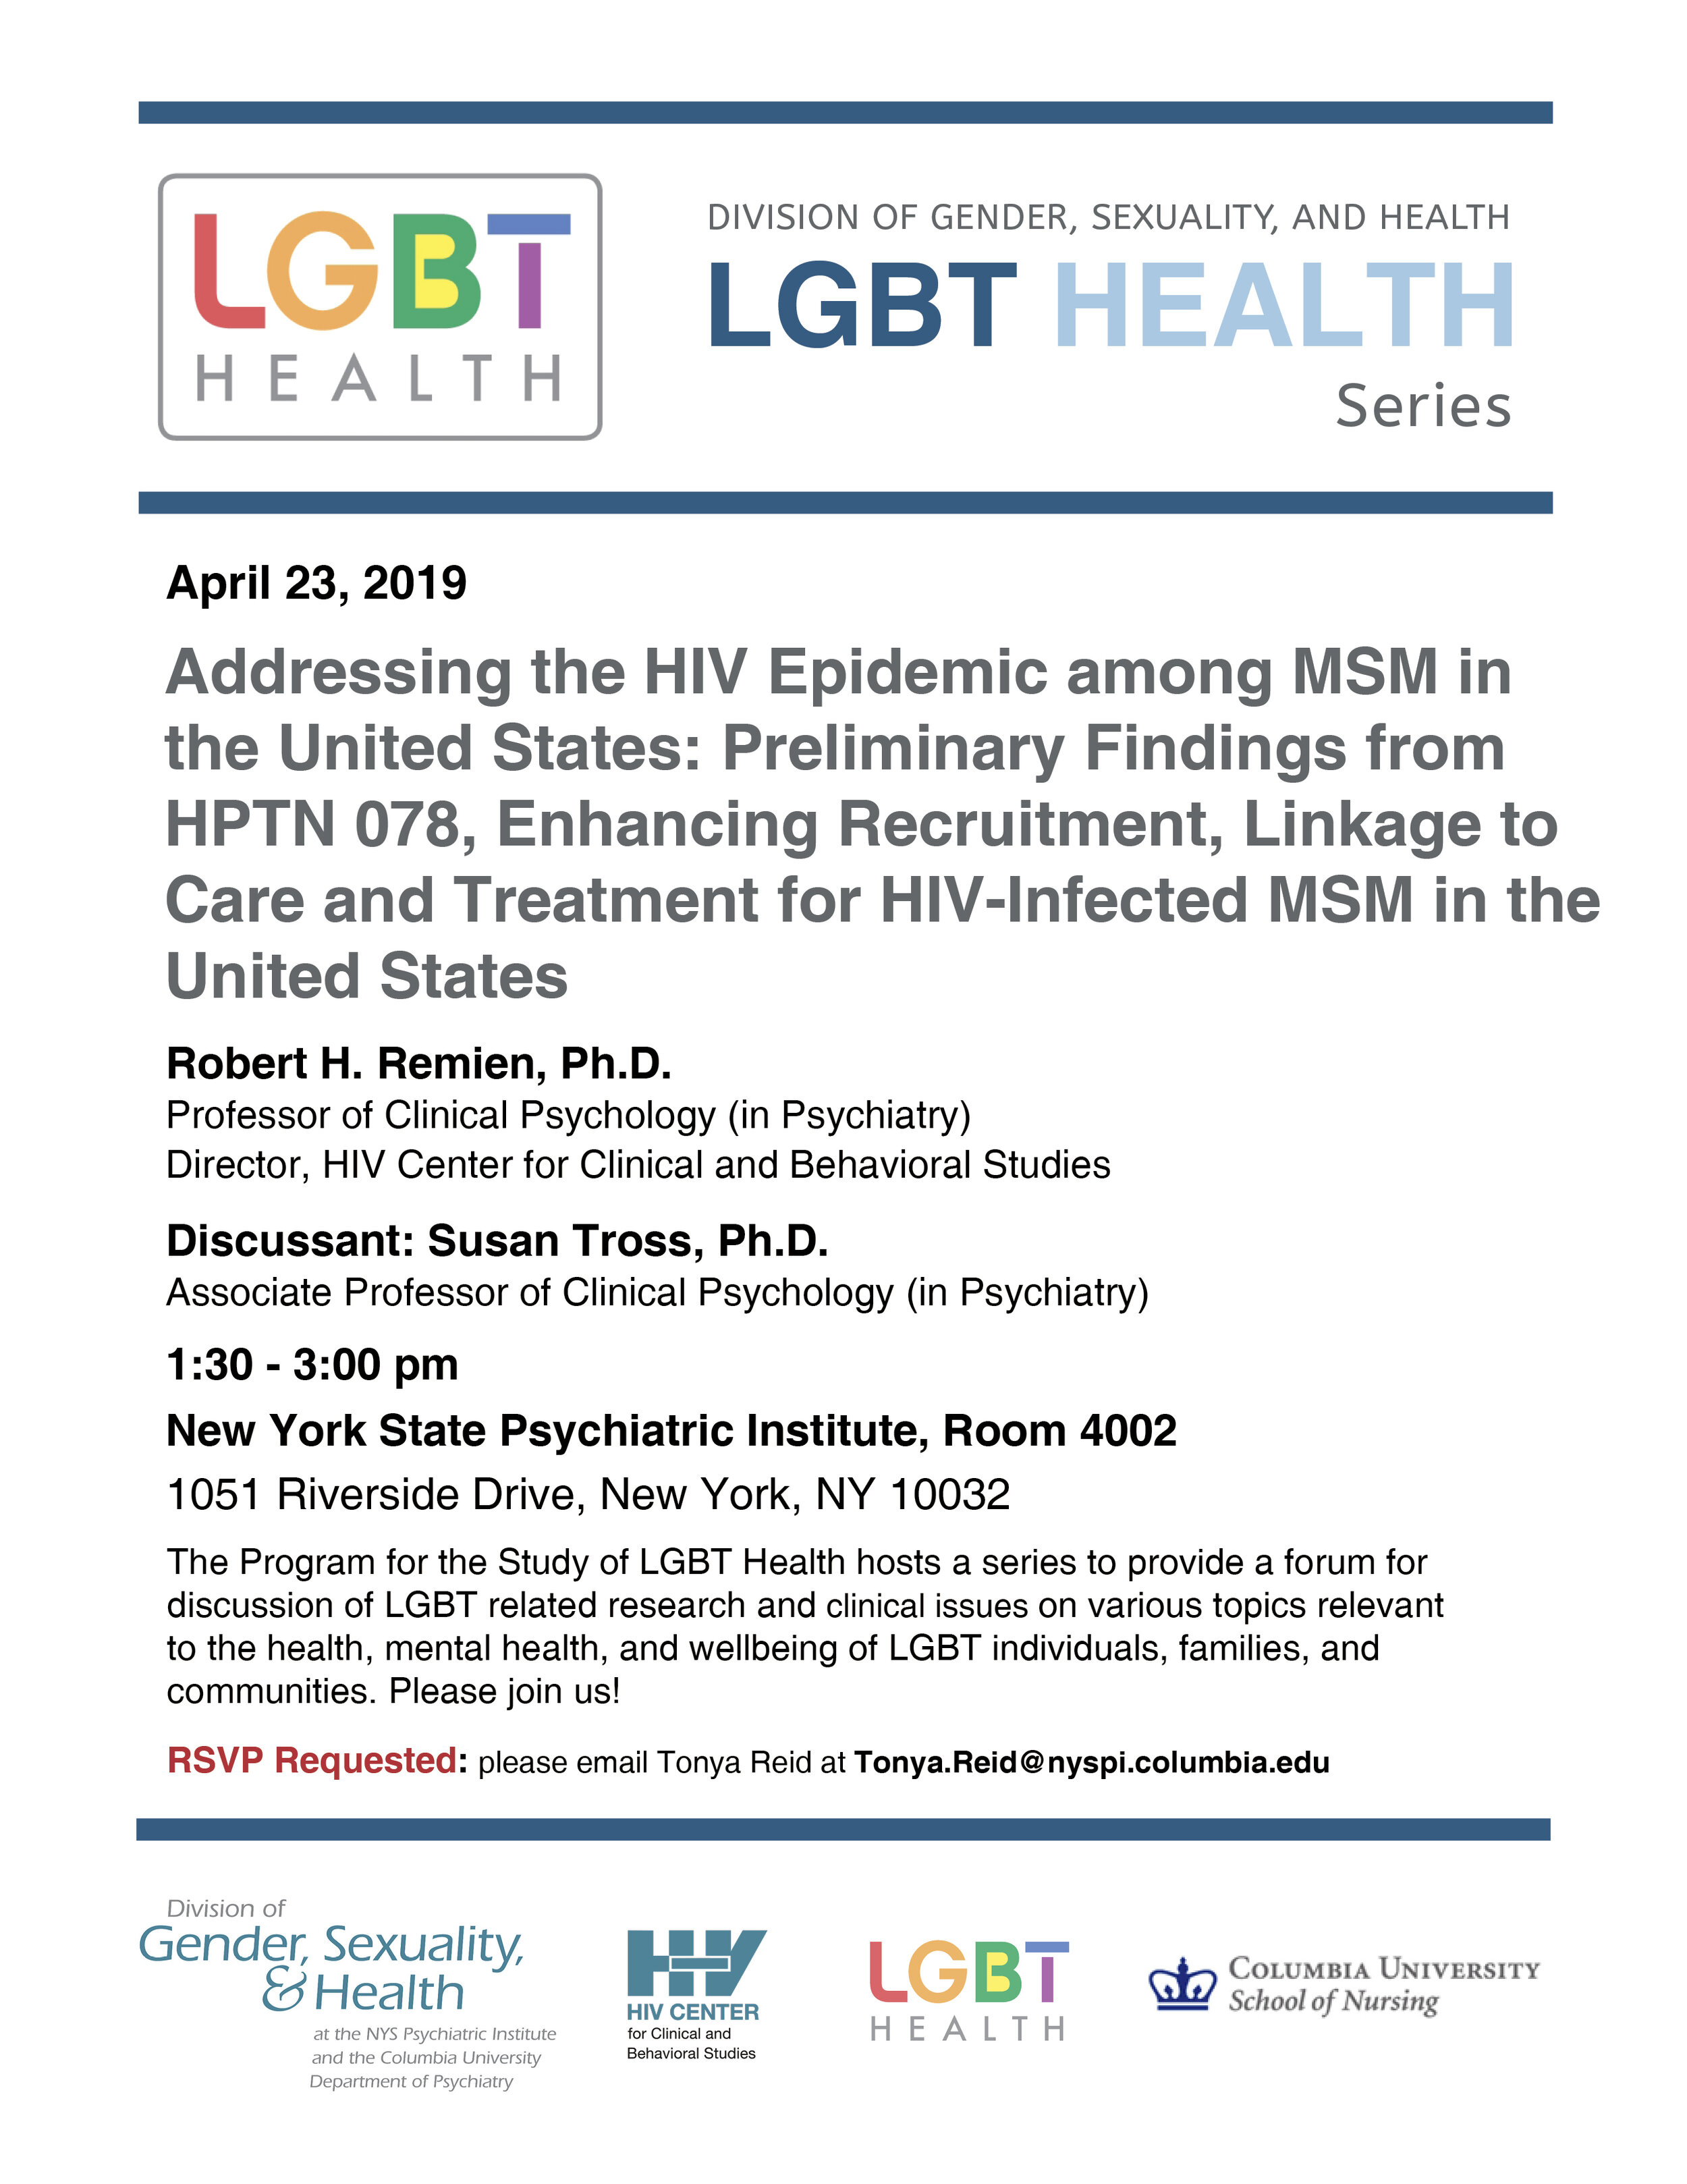 LGBT Health Series Apr 23 2019.jpg